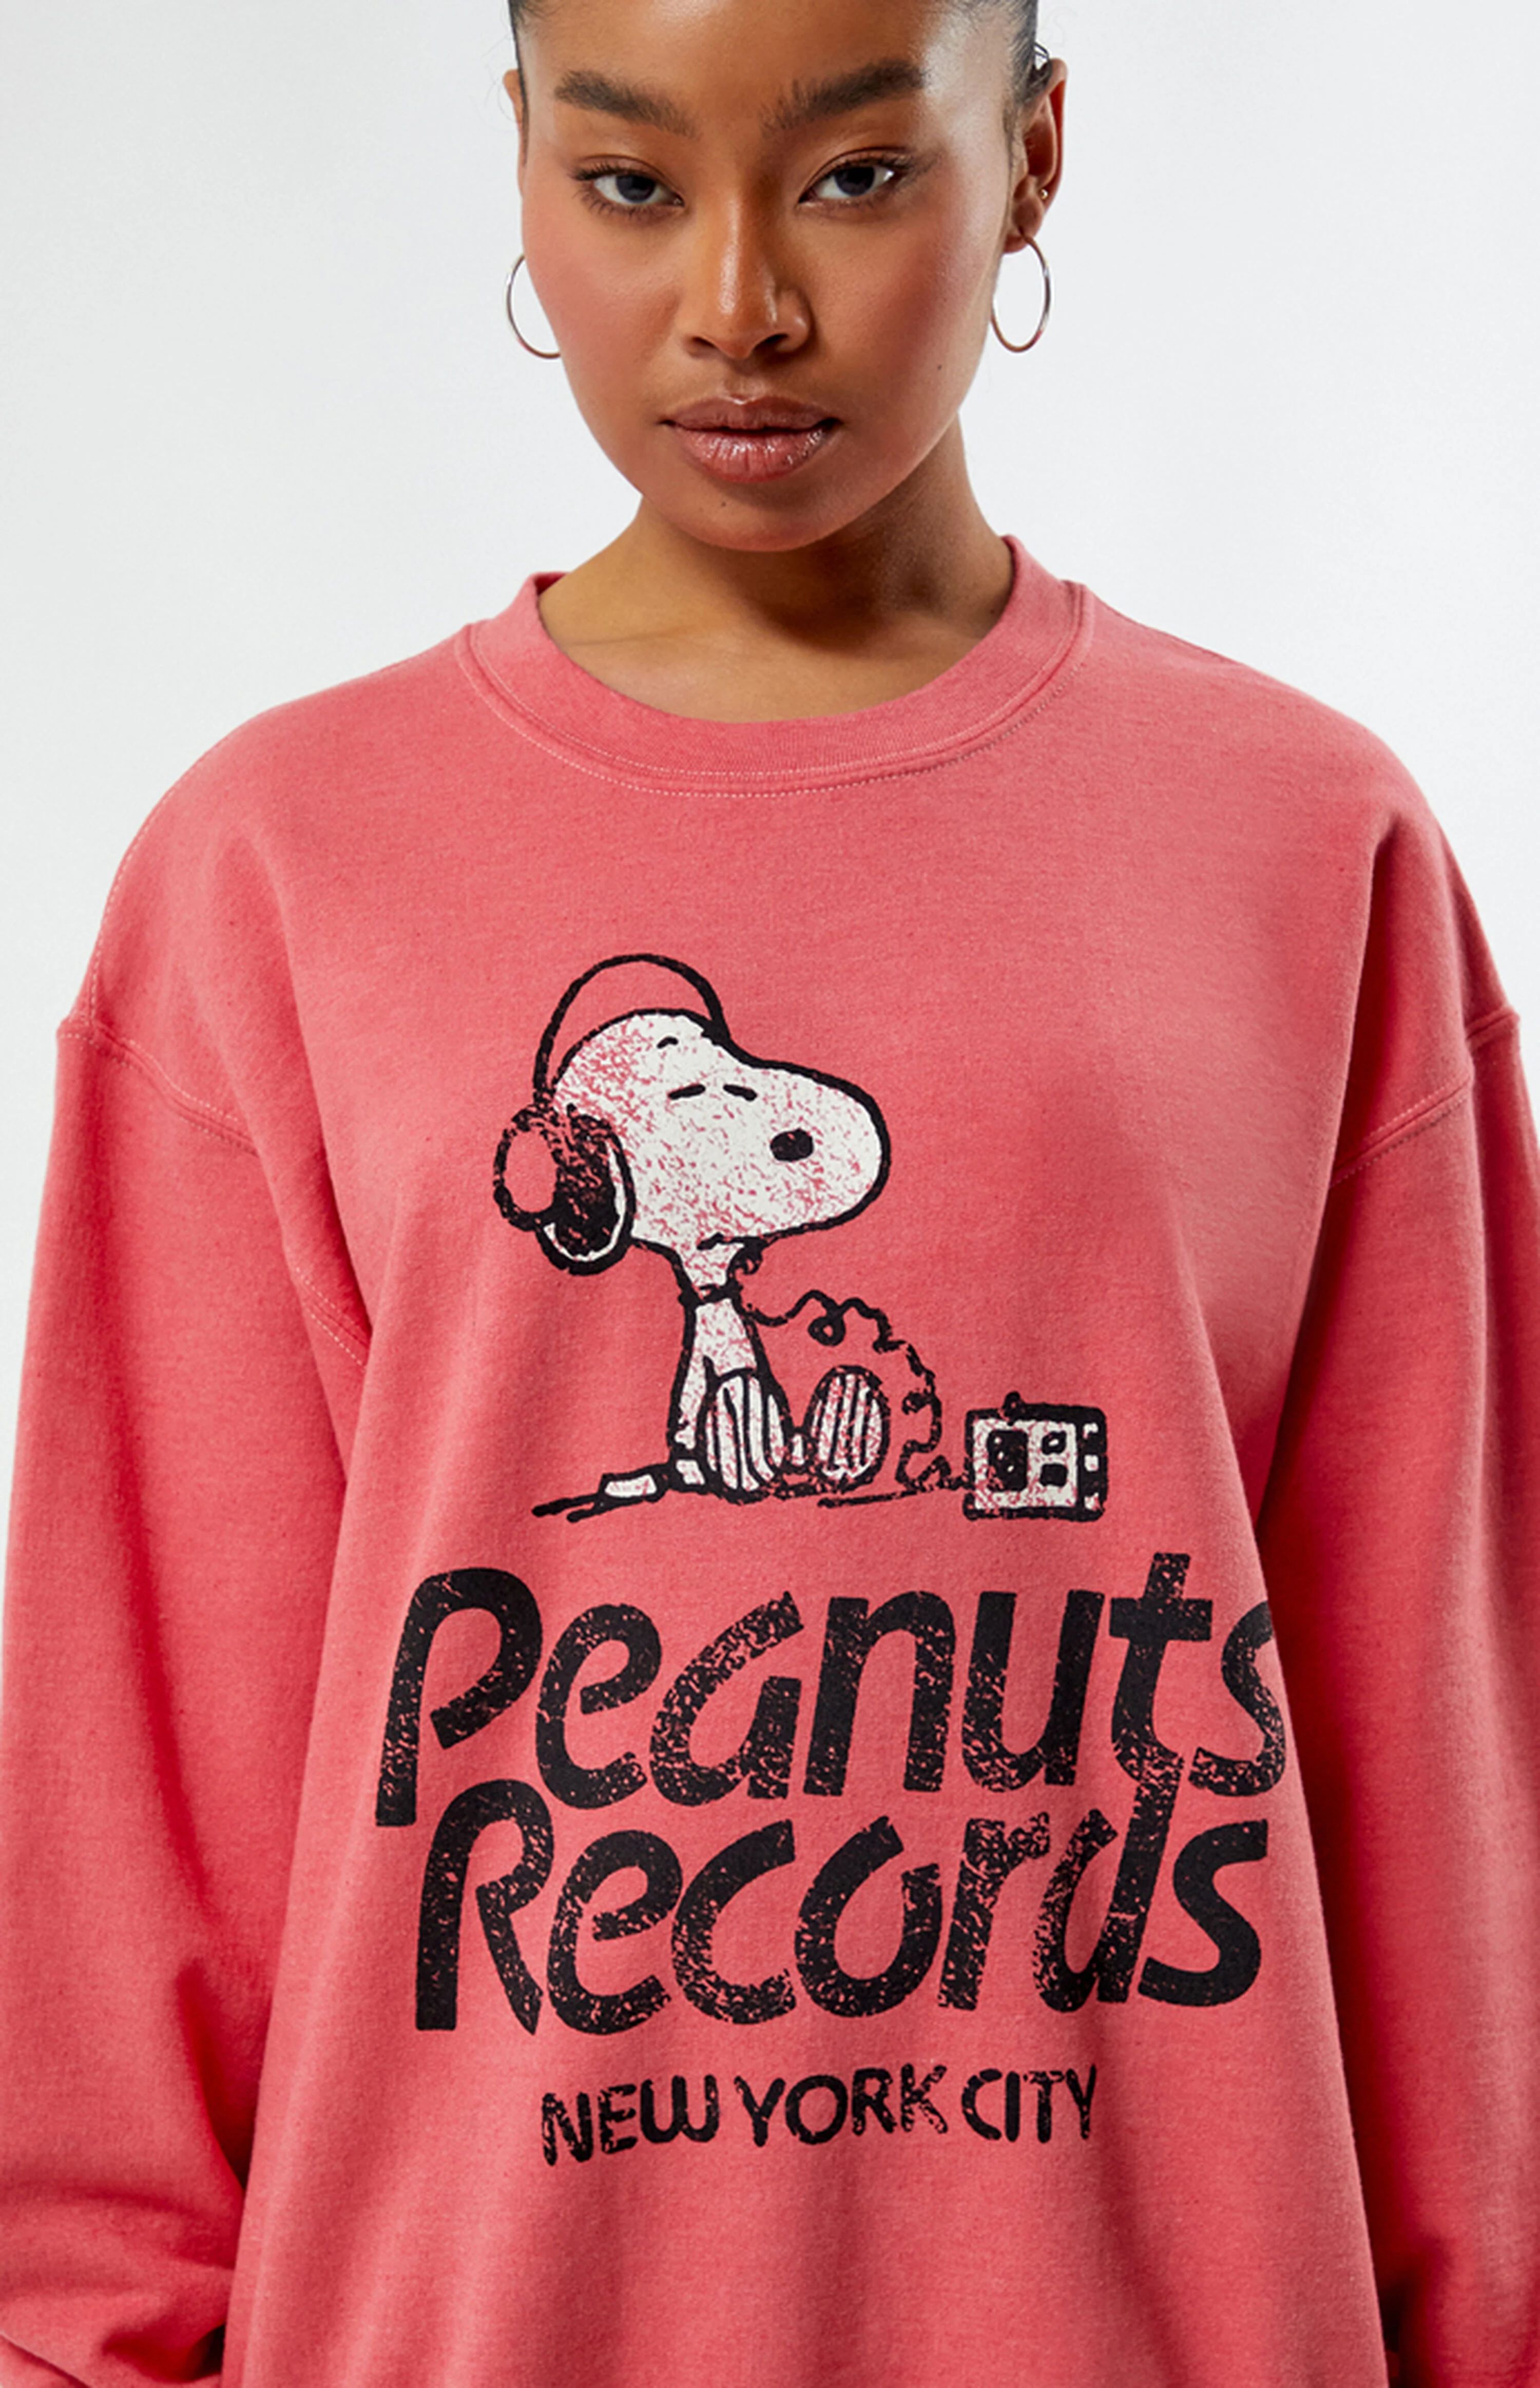 Peanuts Records NYC Headphones Crew Neck Sweatshirt | PacSun